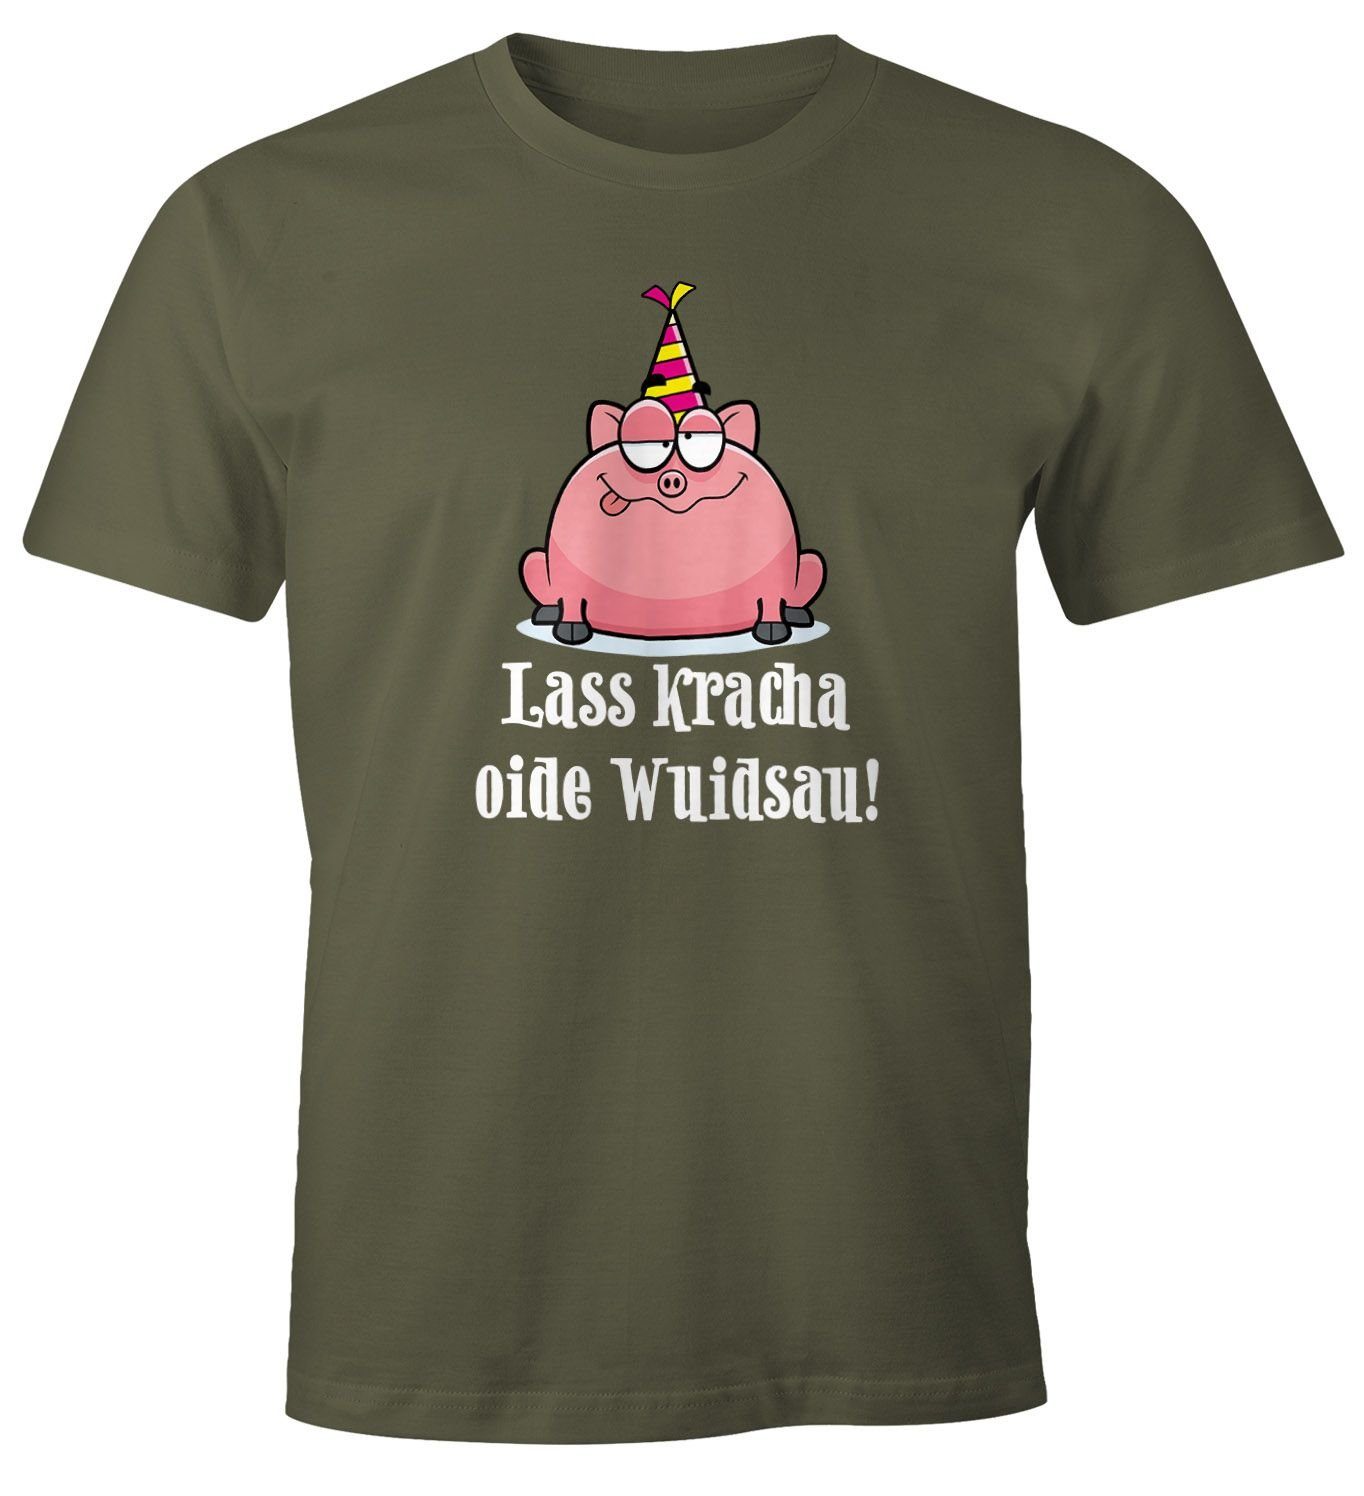 MoonWorks Print-Shirt Herren T-Shirt Geburtstag Schwein Spruch Lass kracha oide Wuidsau Fun-Shirt Geschenk Moonworks® mit Print grün | T-Shirts